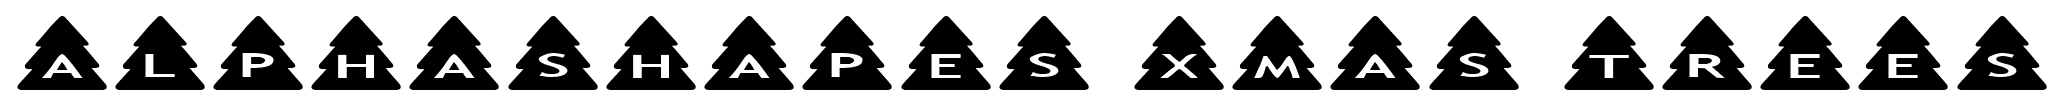 alphashapes xmas trees font